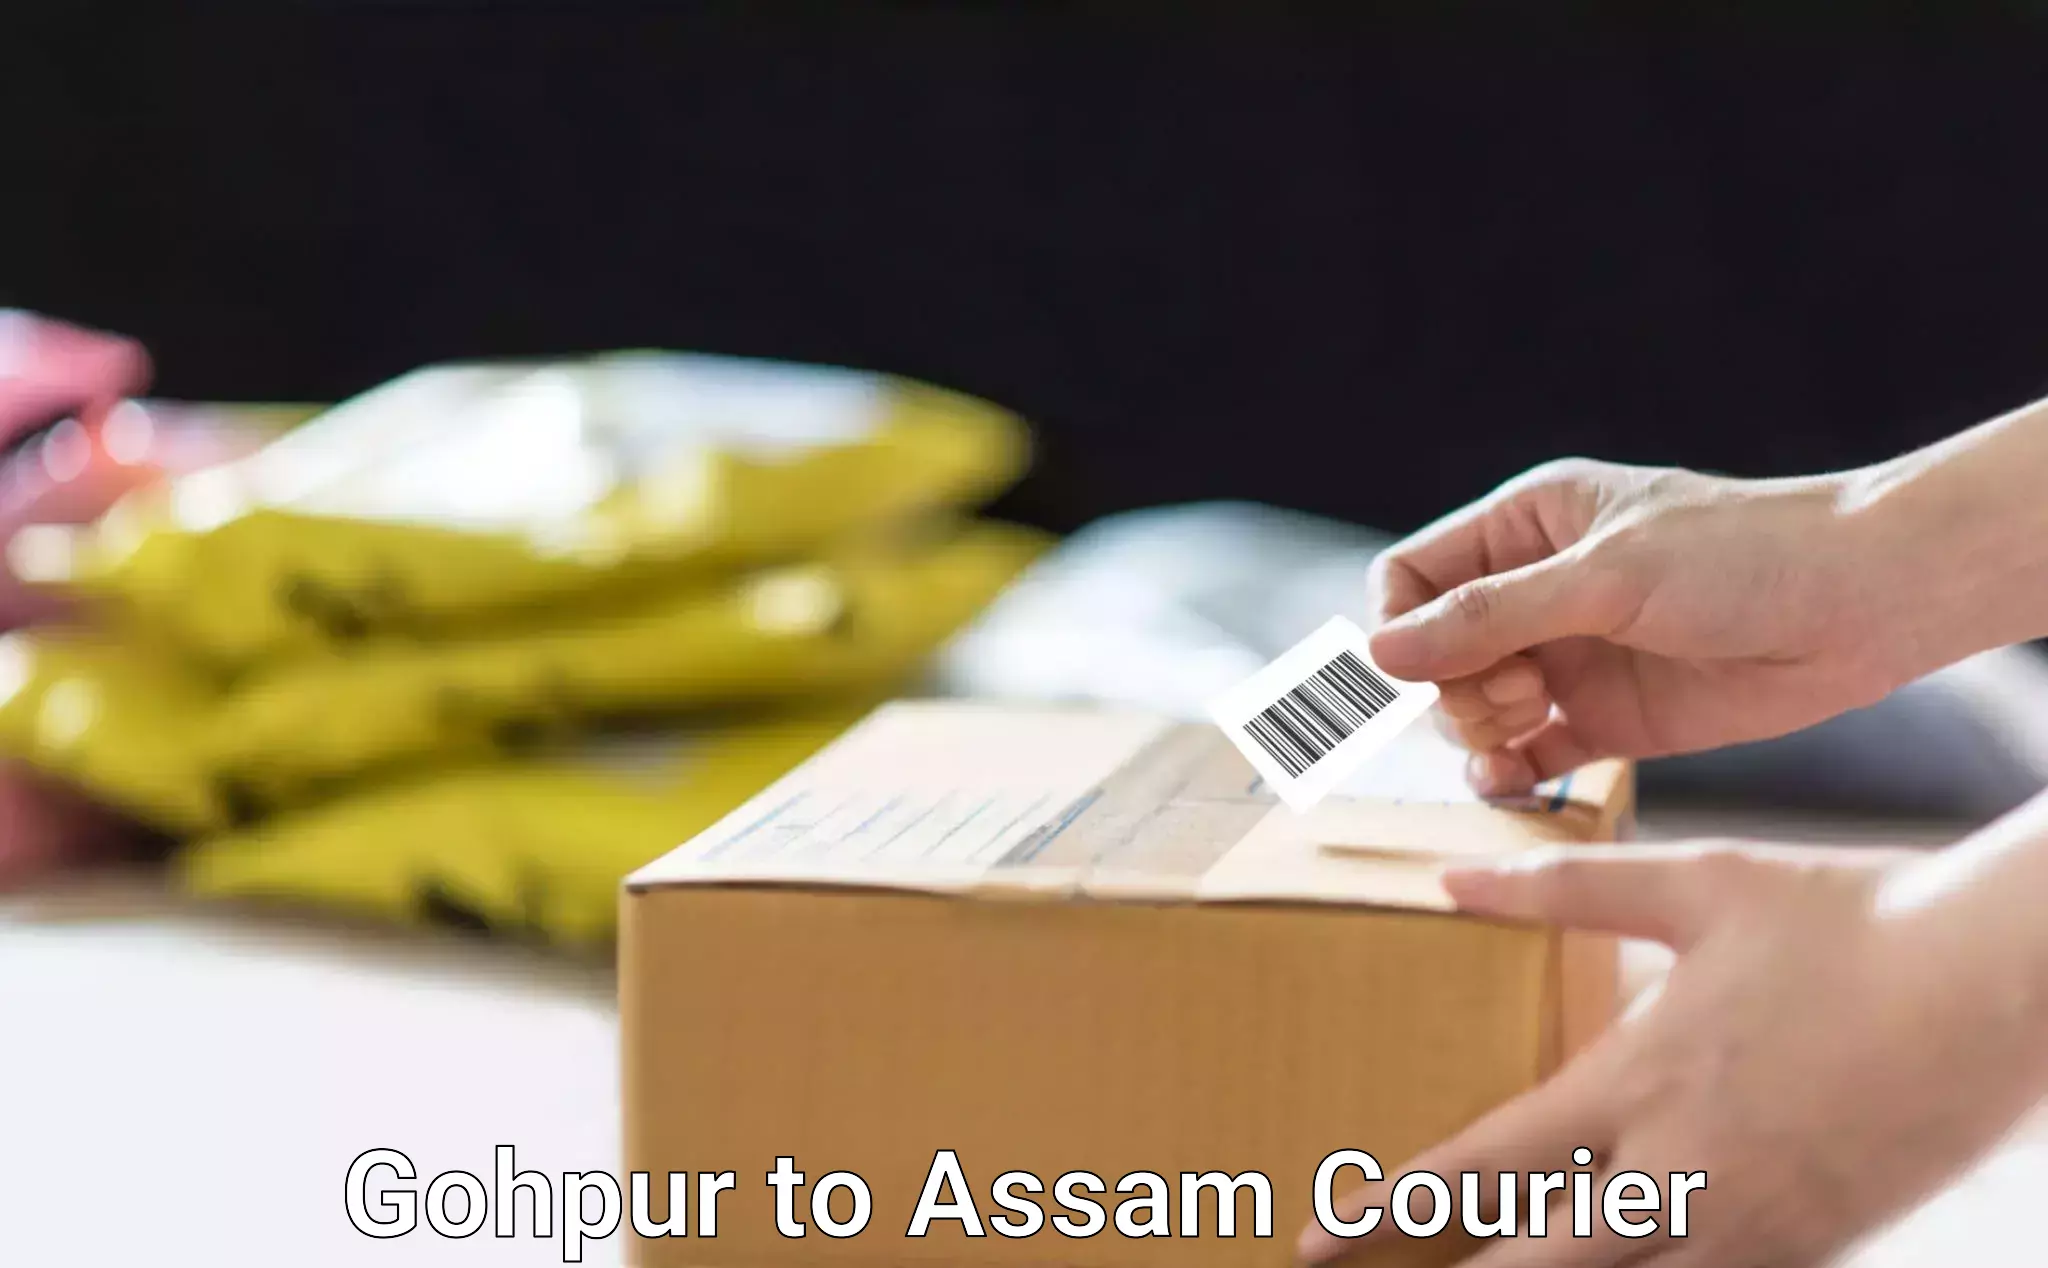 Courier rate comparison Gohpur to Assam